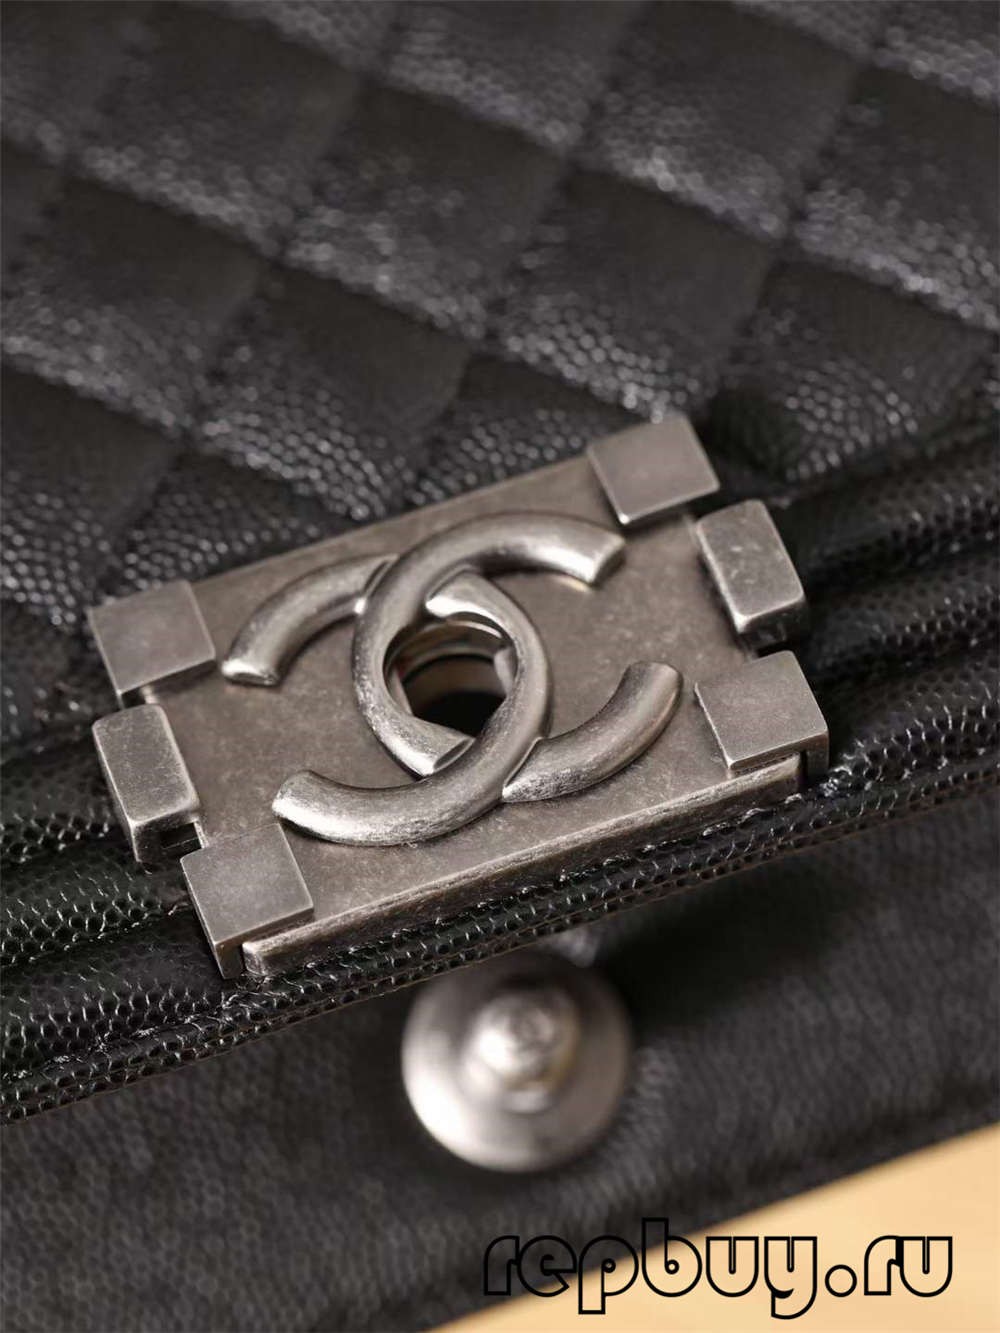 Chanel Le boy medium black top replica handbags Appearance (2022 Updated)-Best Quality Fake designer Bag Review, Replica designer bag ru